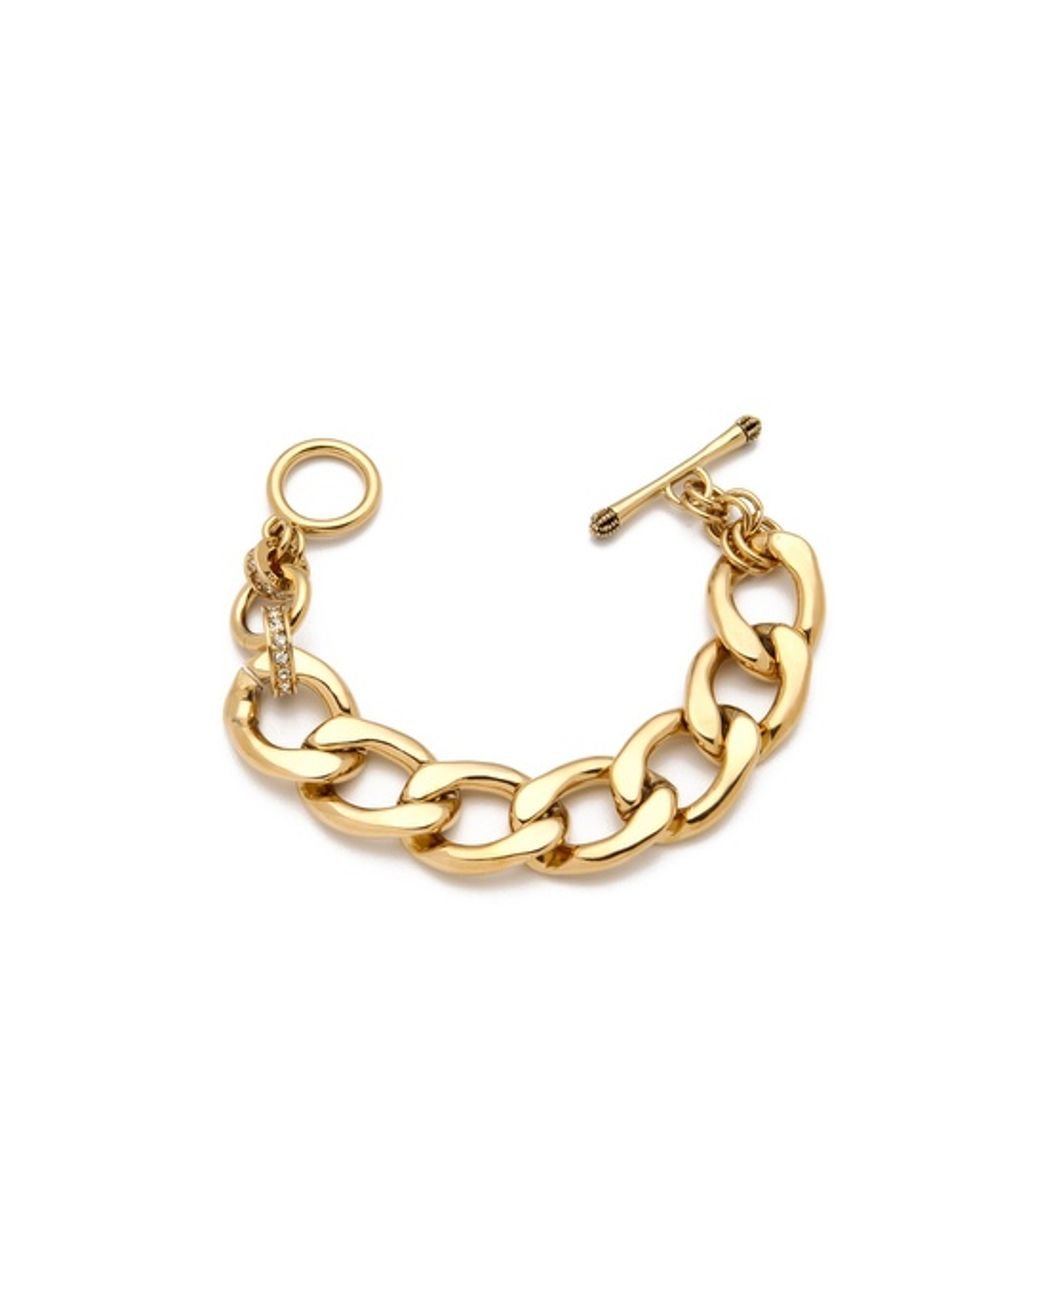 Juicy Couture Charm Bracelet Gold Tone Heart Double Side Design Link Chain  75034  eBay